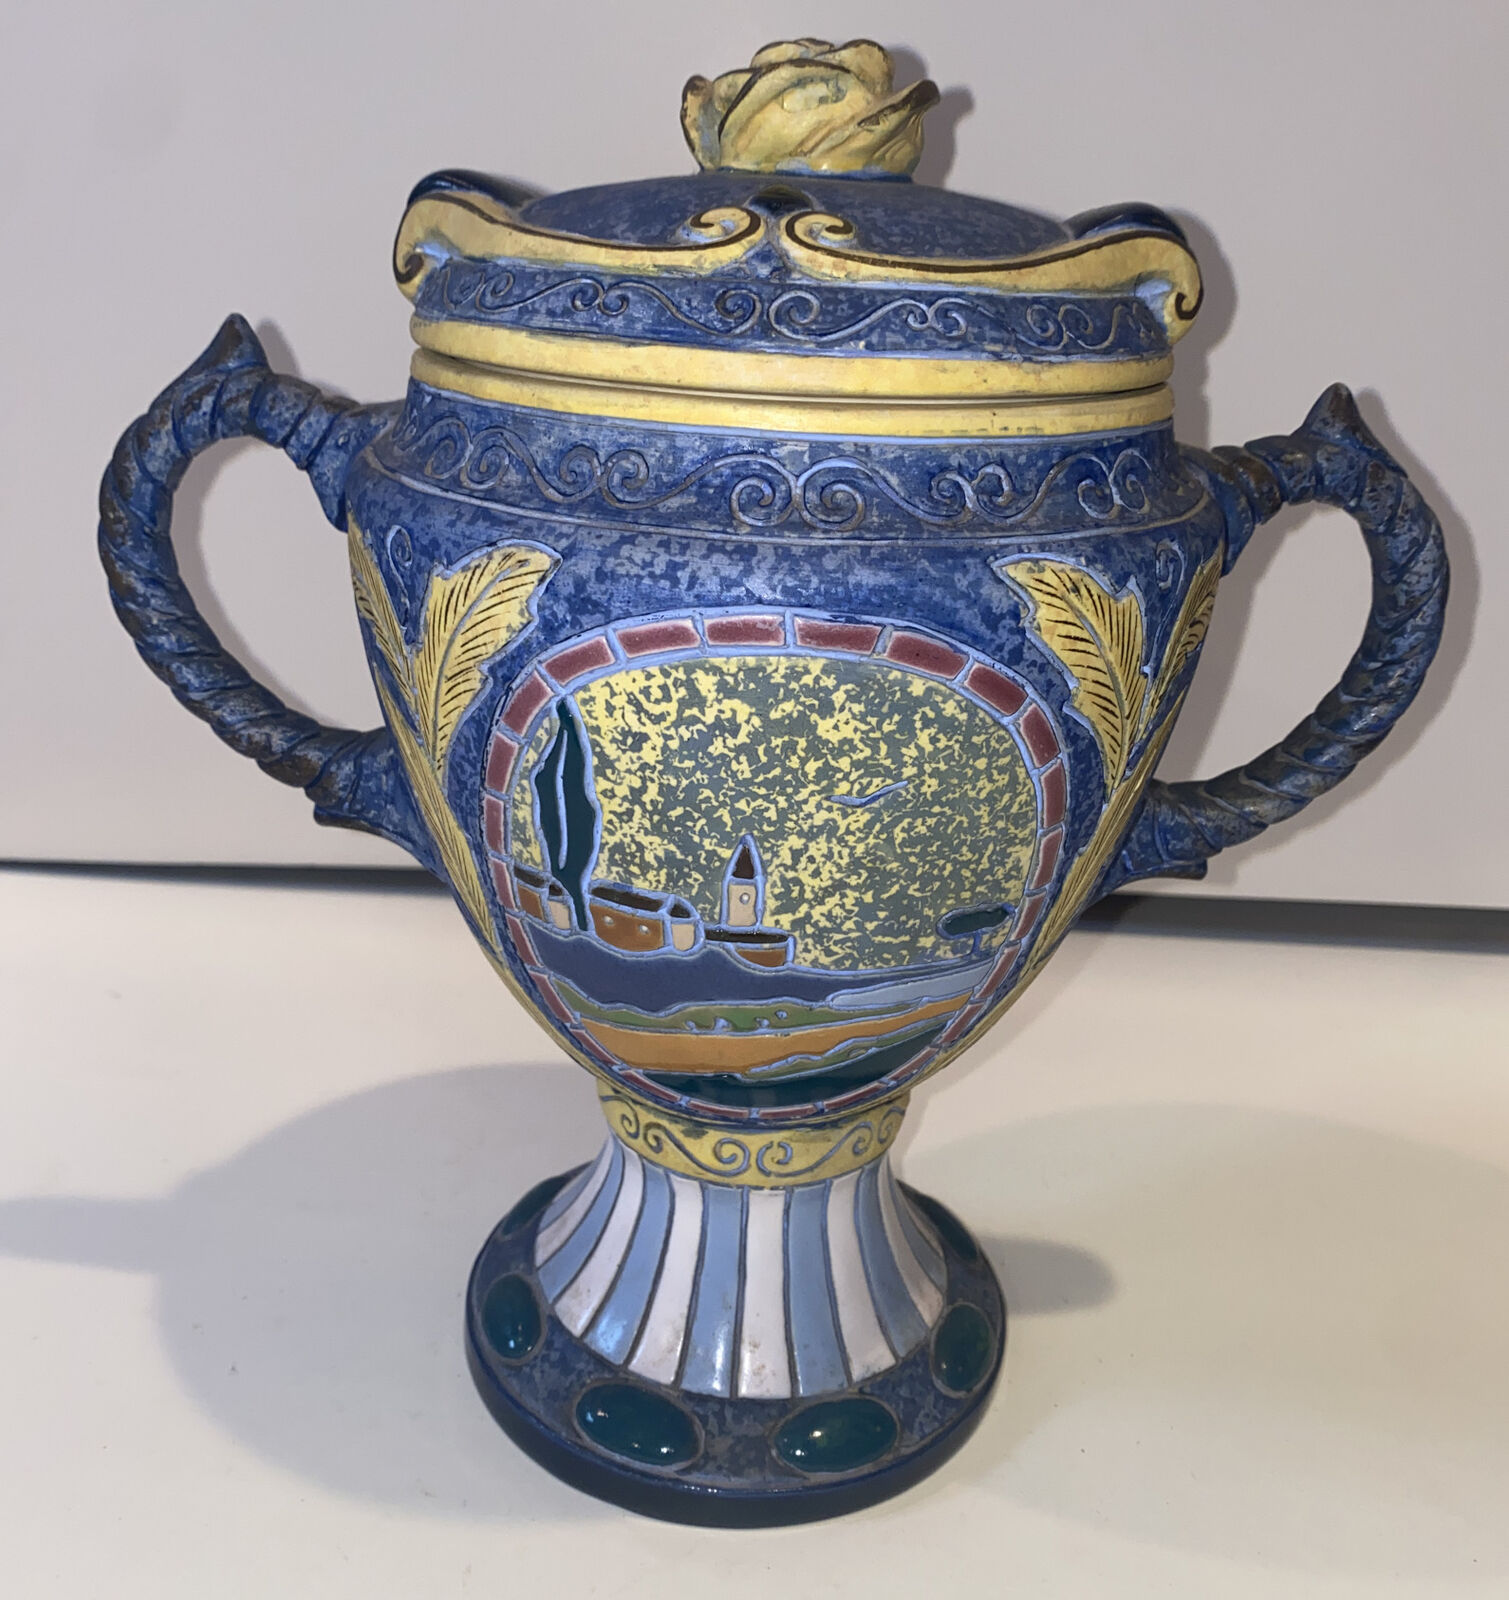 Amphora Czechoslovakia Amphora vase with lid knight 2 Handled Blue Eathenware